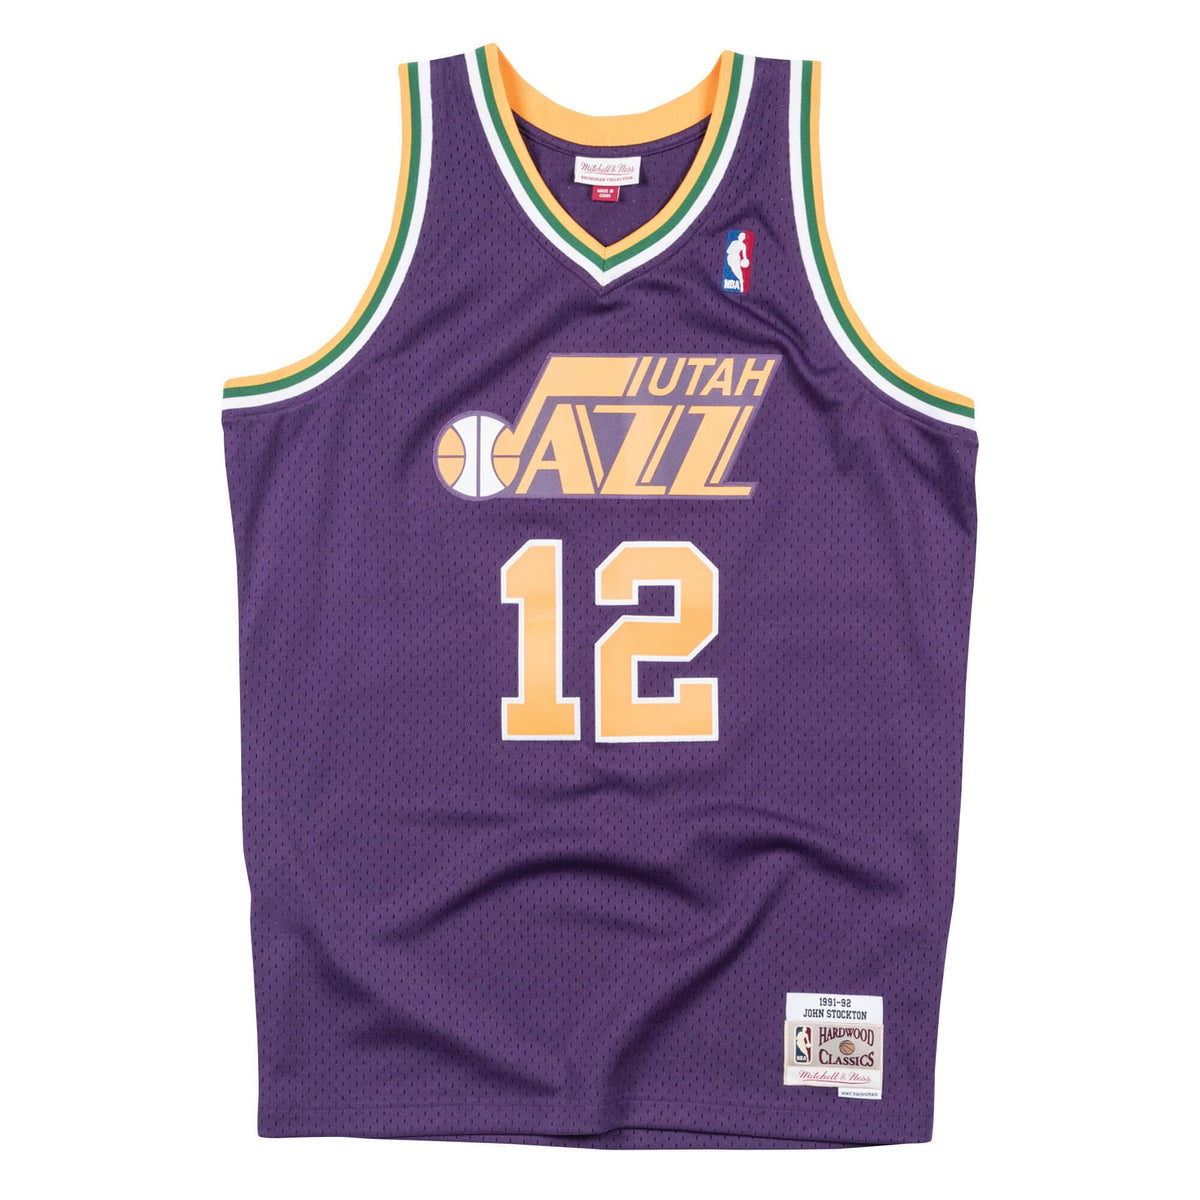 Kids Utah Jazz John Stockton 1991-92 Jersey